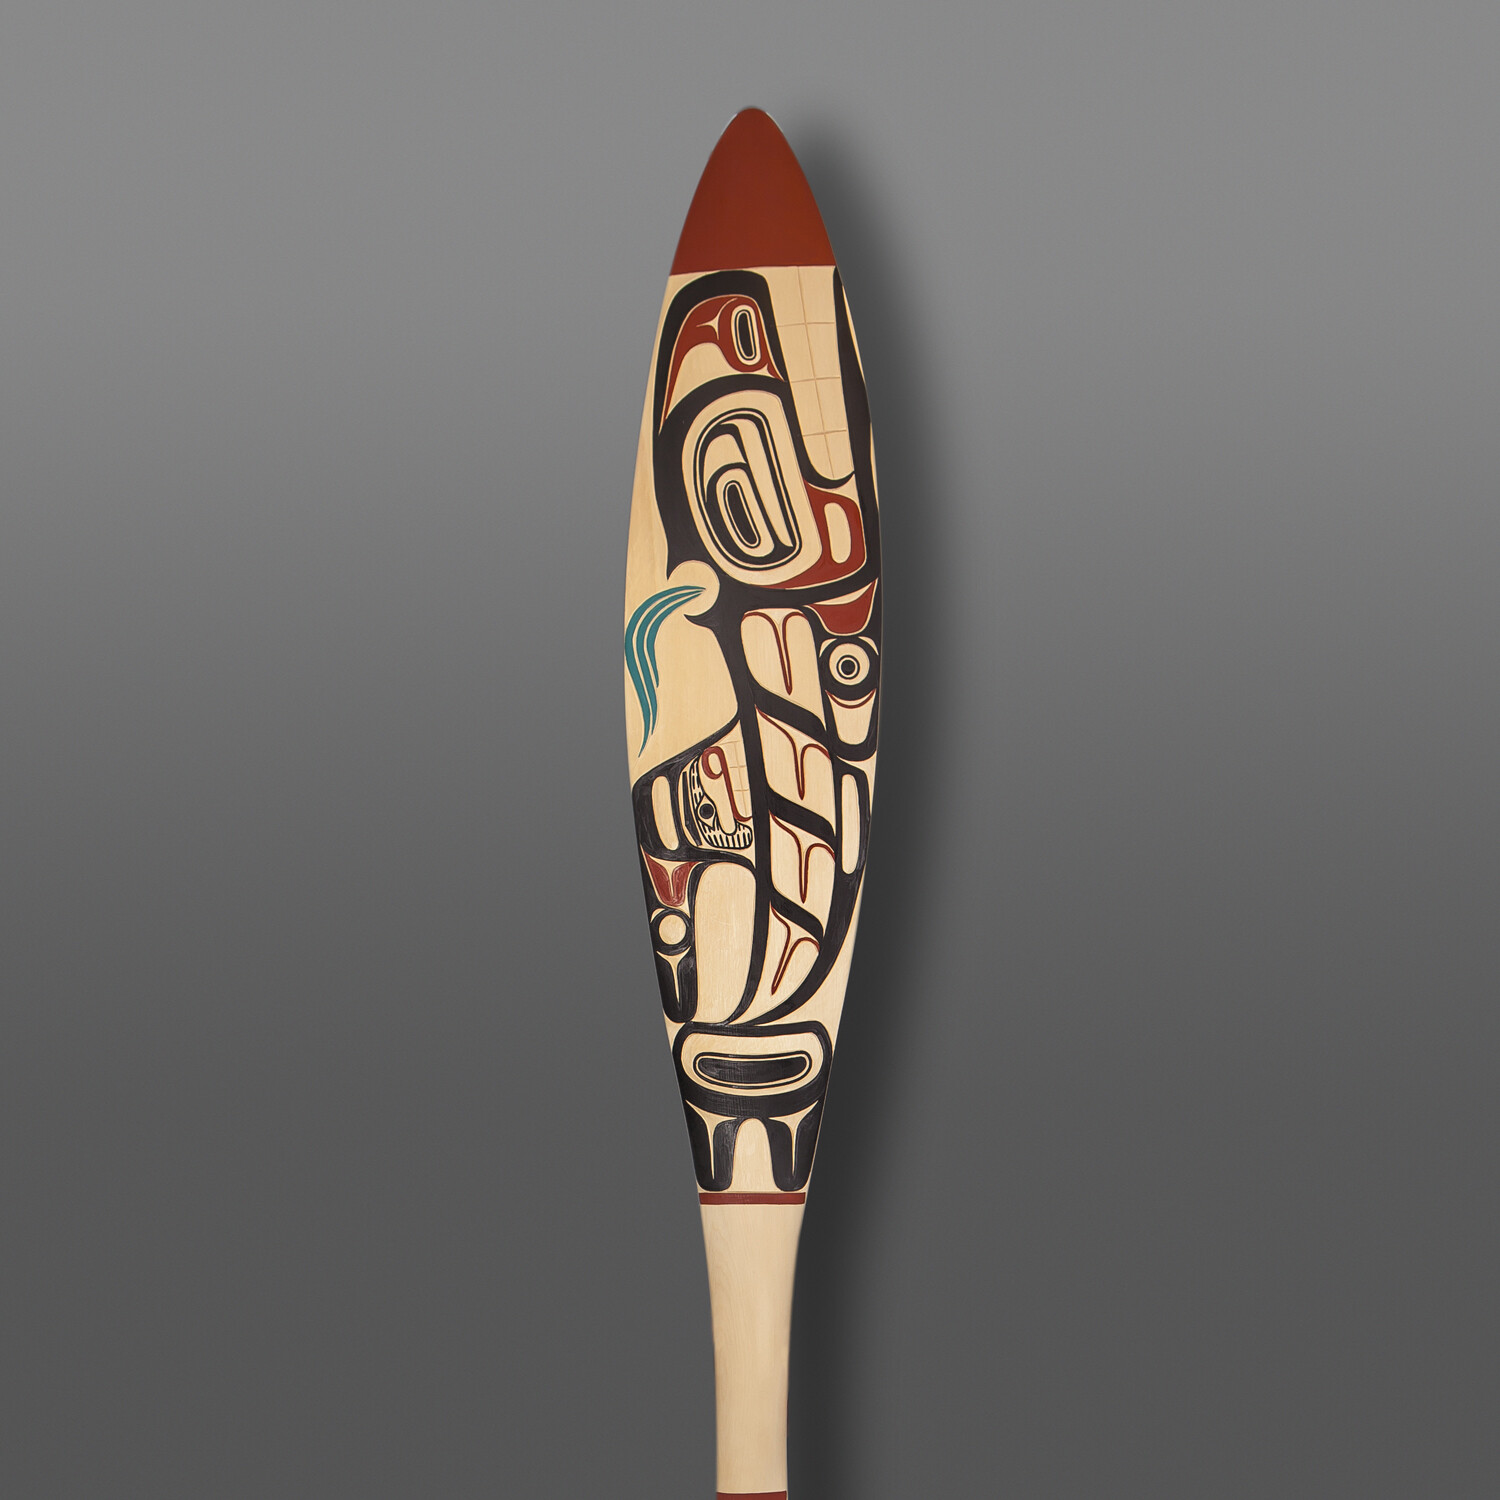 Orca Paddle
David Boxley Sr
Tsimshian
Yellow cedar, paint
60" x 6"
$3900